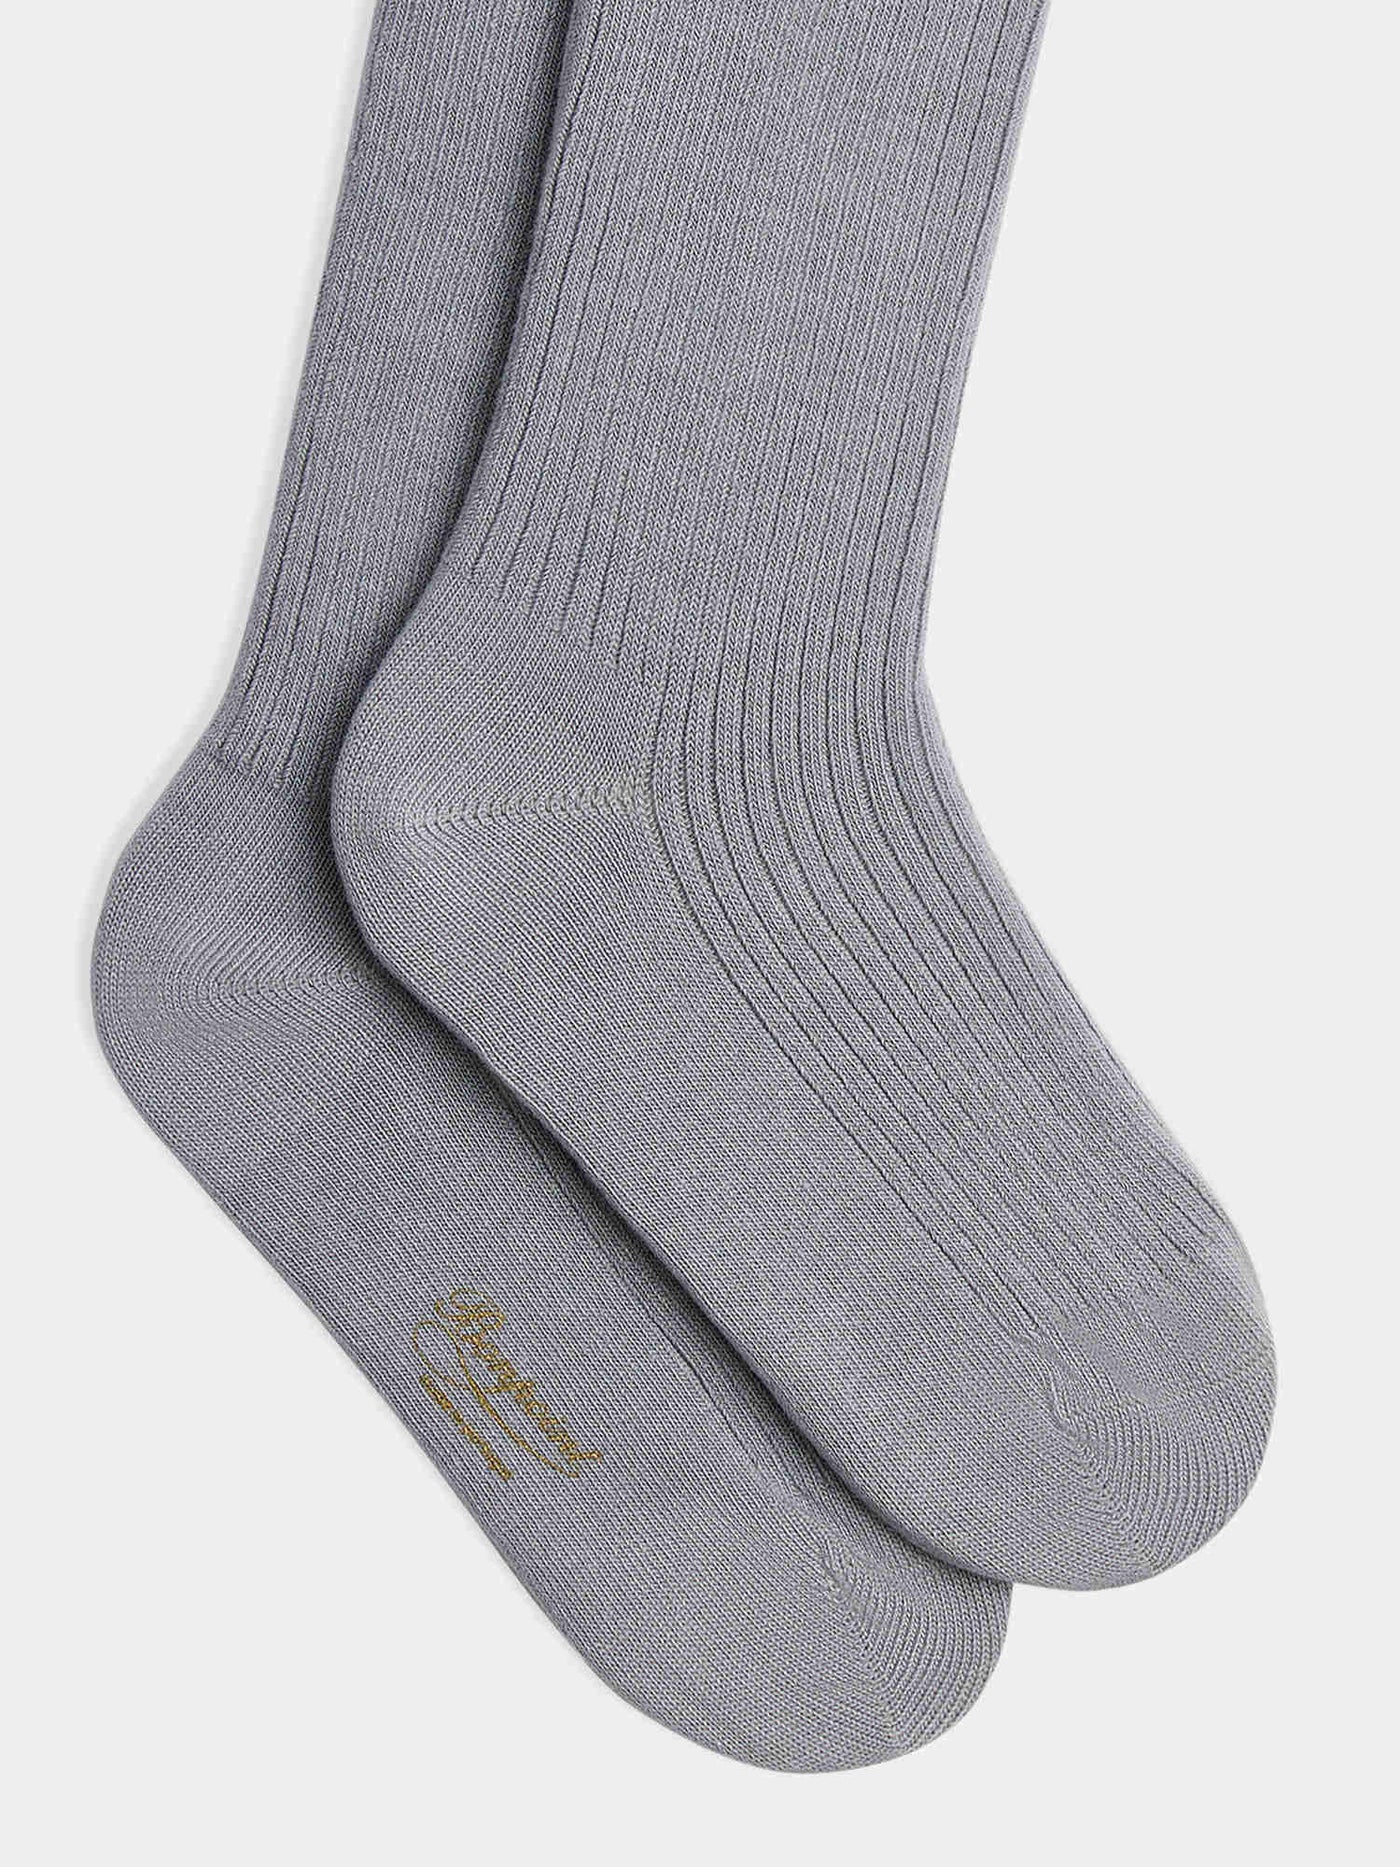 Arizona Socks mauve gray